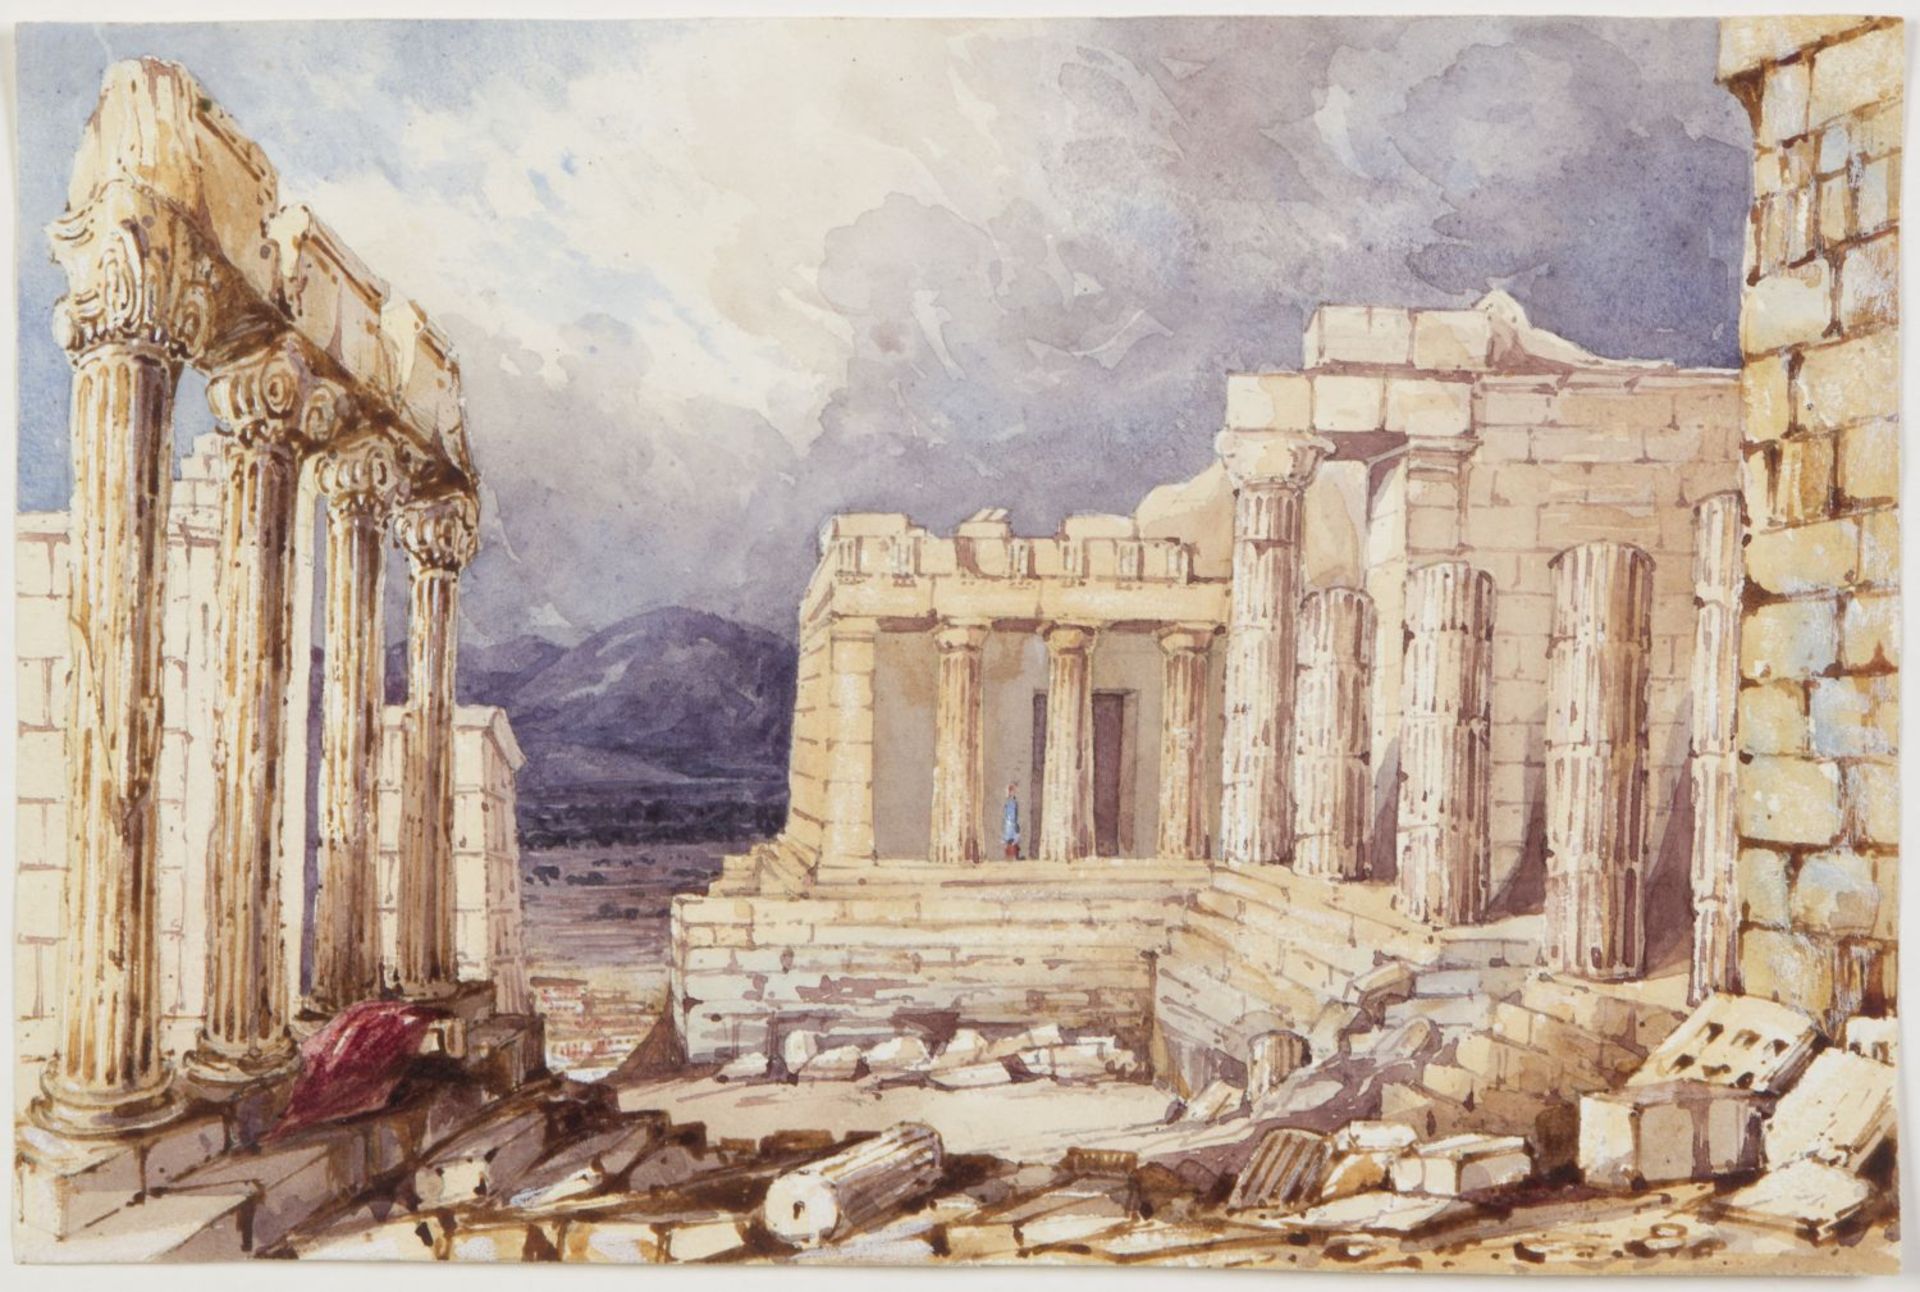 Unbekannt, um 1900 Ruinen eines Tempels, mglw. Akropolis. Aquarell. 16,5 x 25 cm.